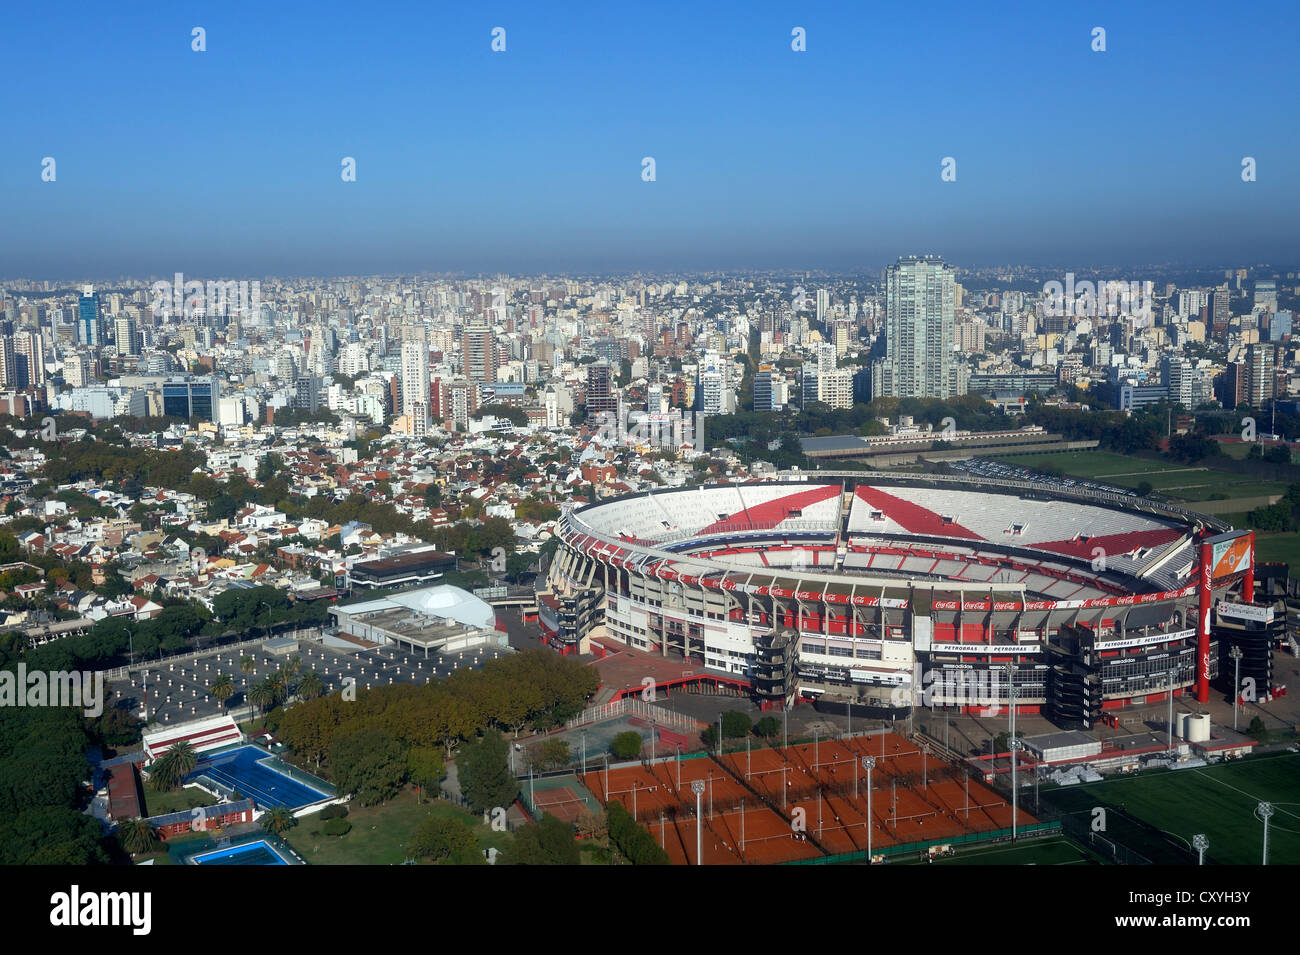 L'Estadio Monumental de Nuñez stade du Club Atlético River Plate football club, district de Belgrano, Buenos Aires, Argentine Banque D'Images